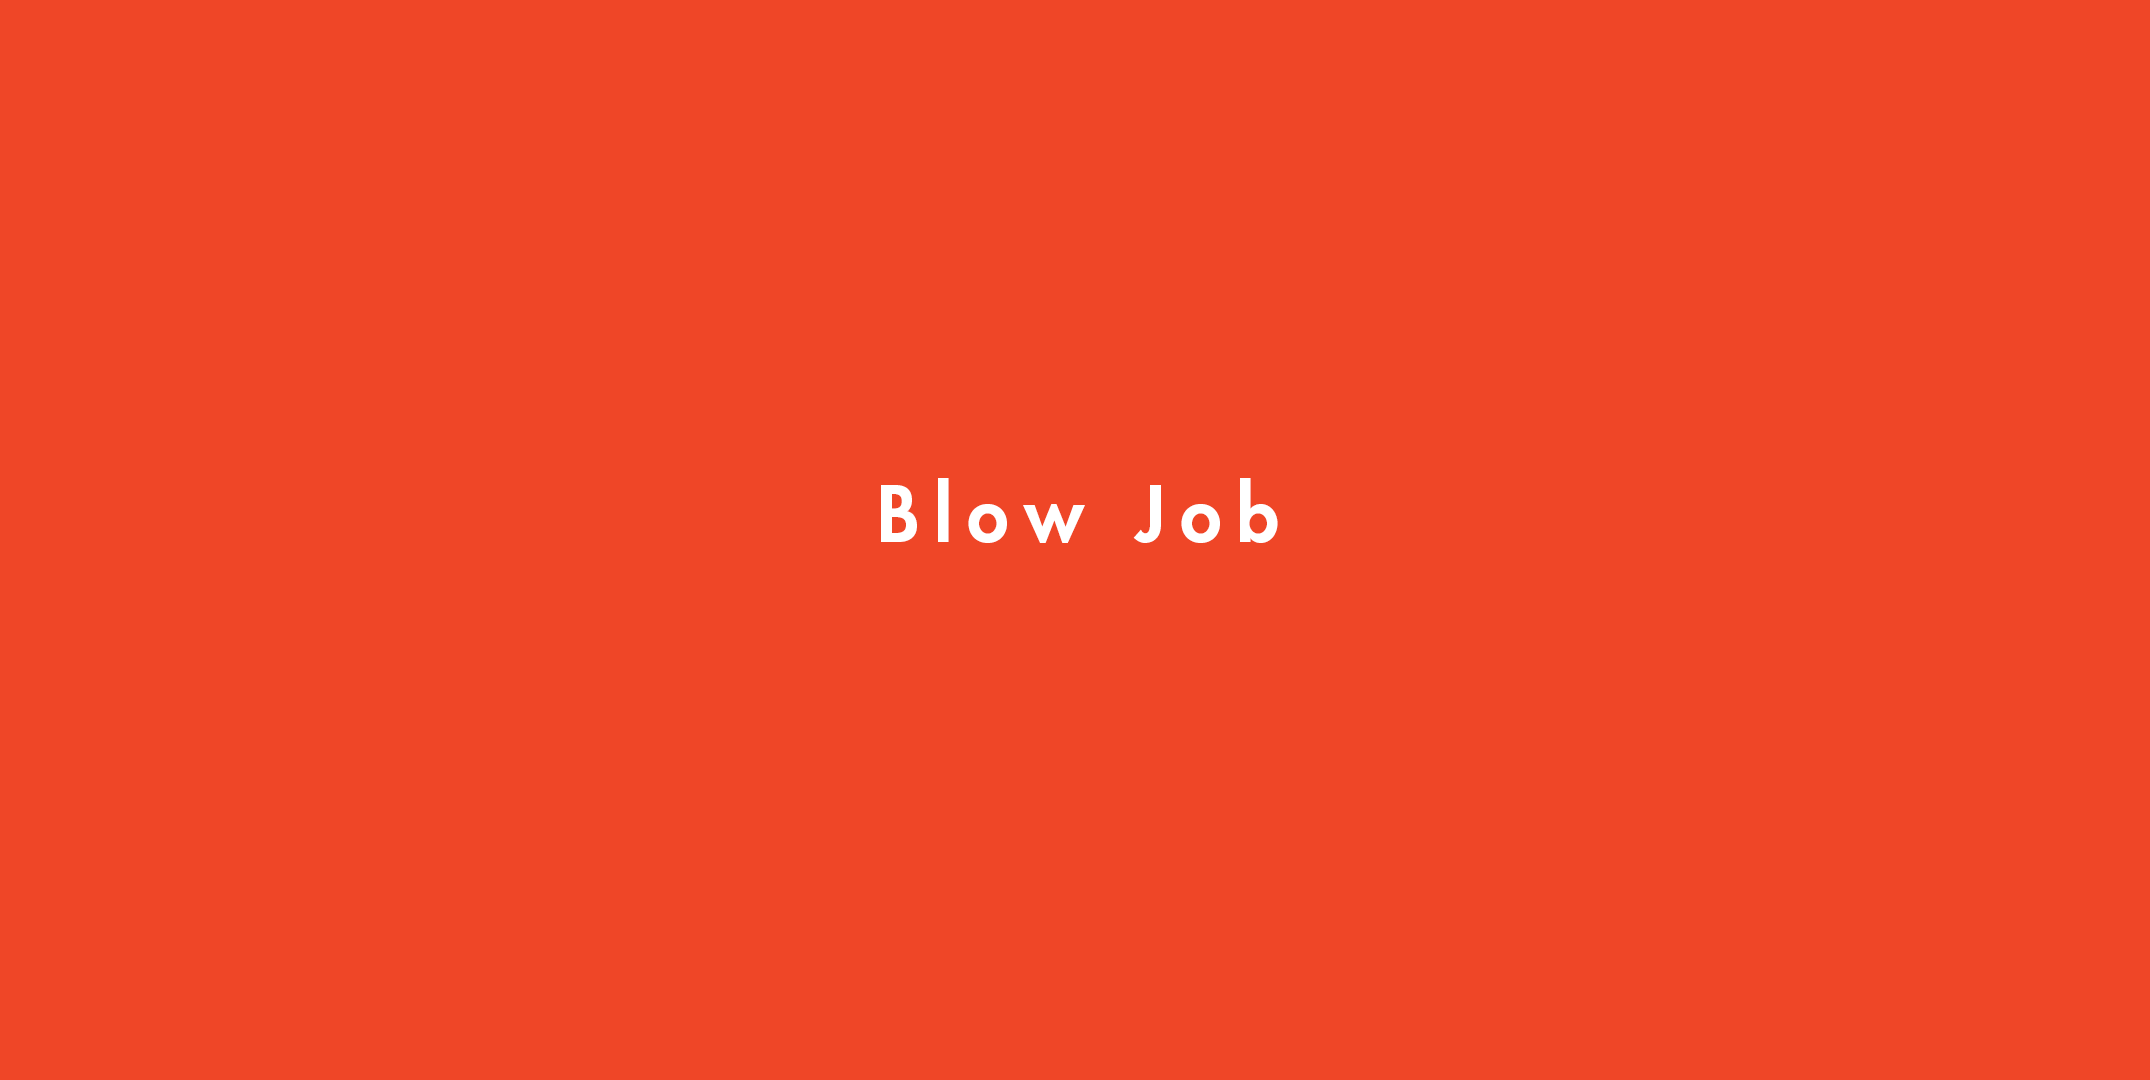 Blow Job Definition pic